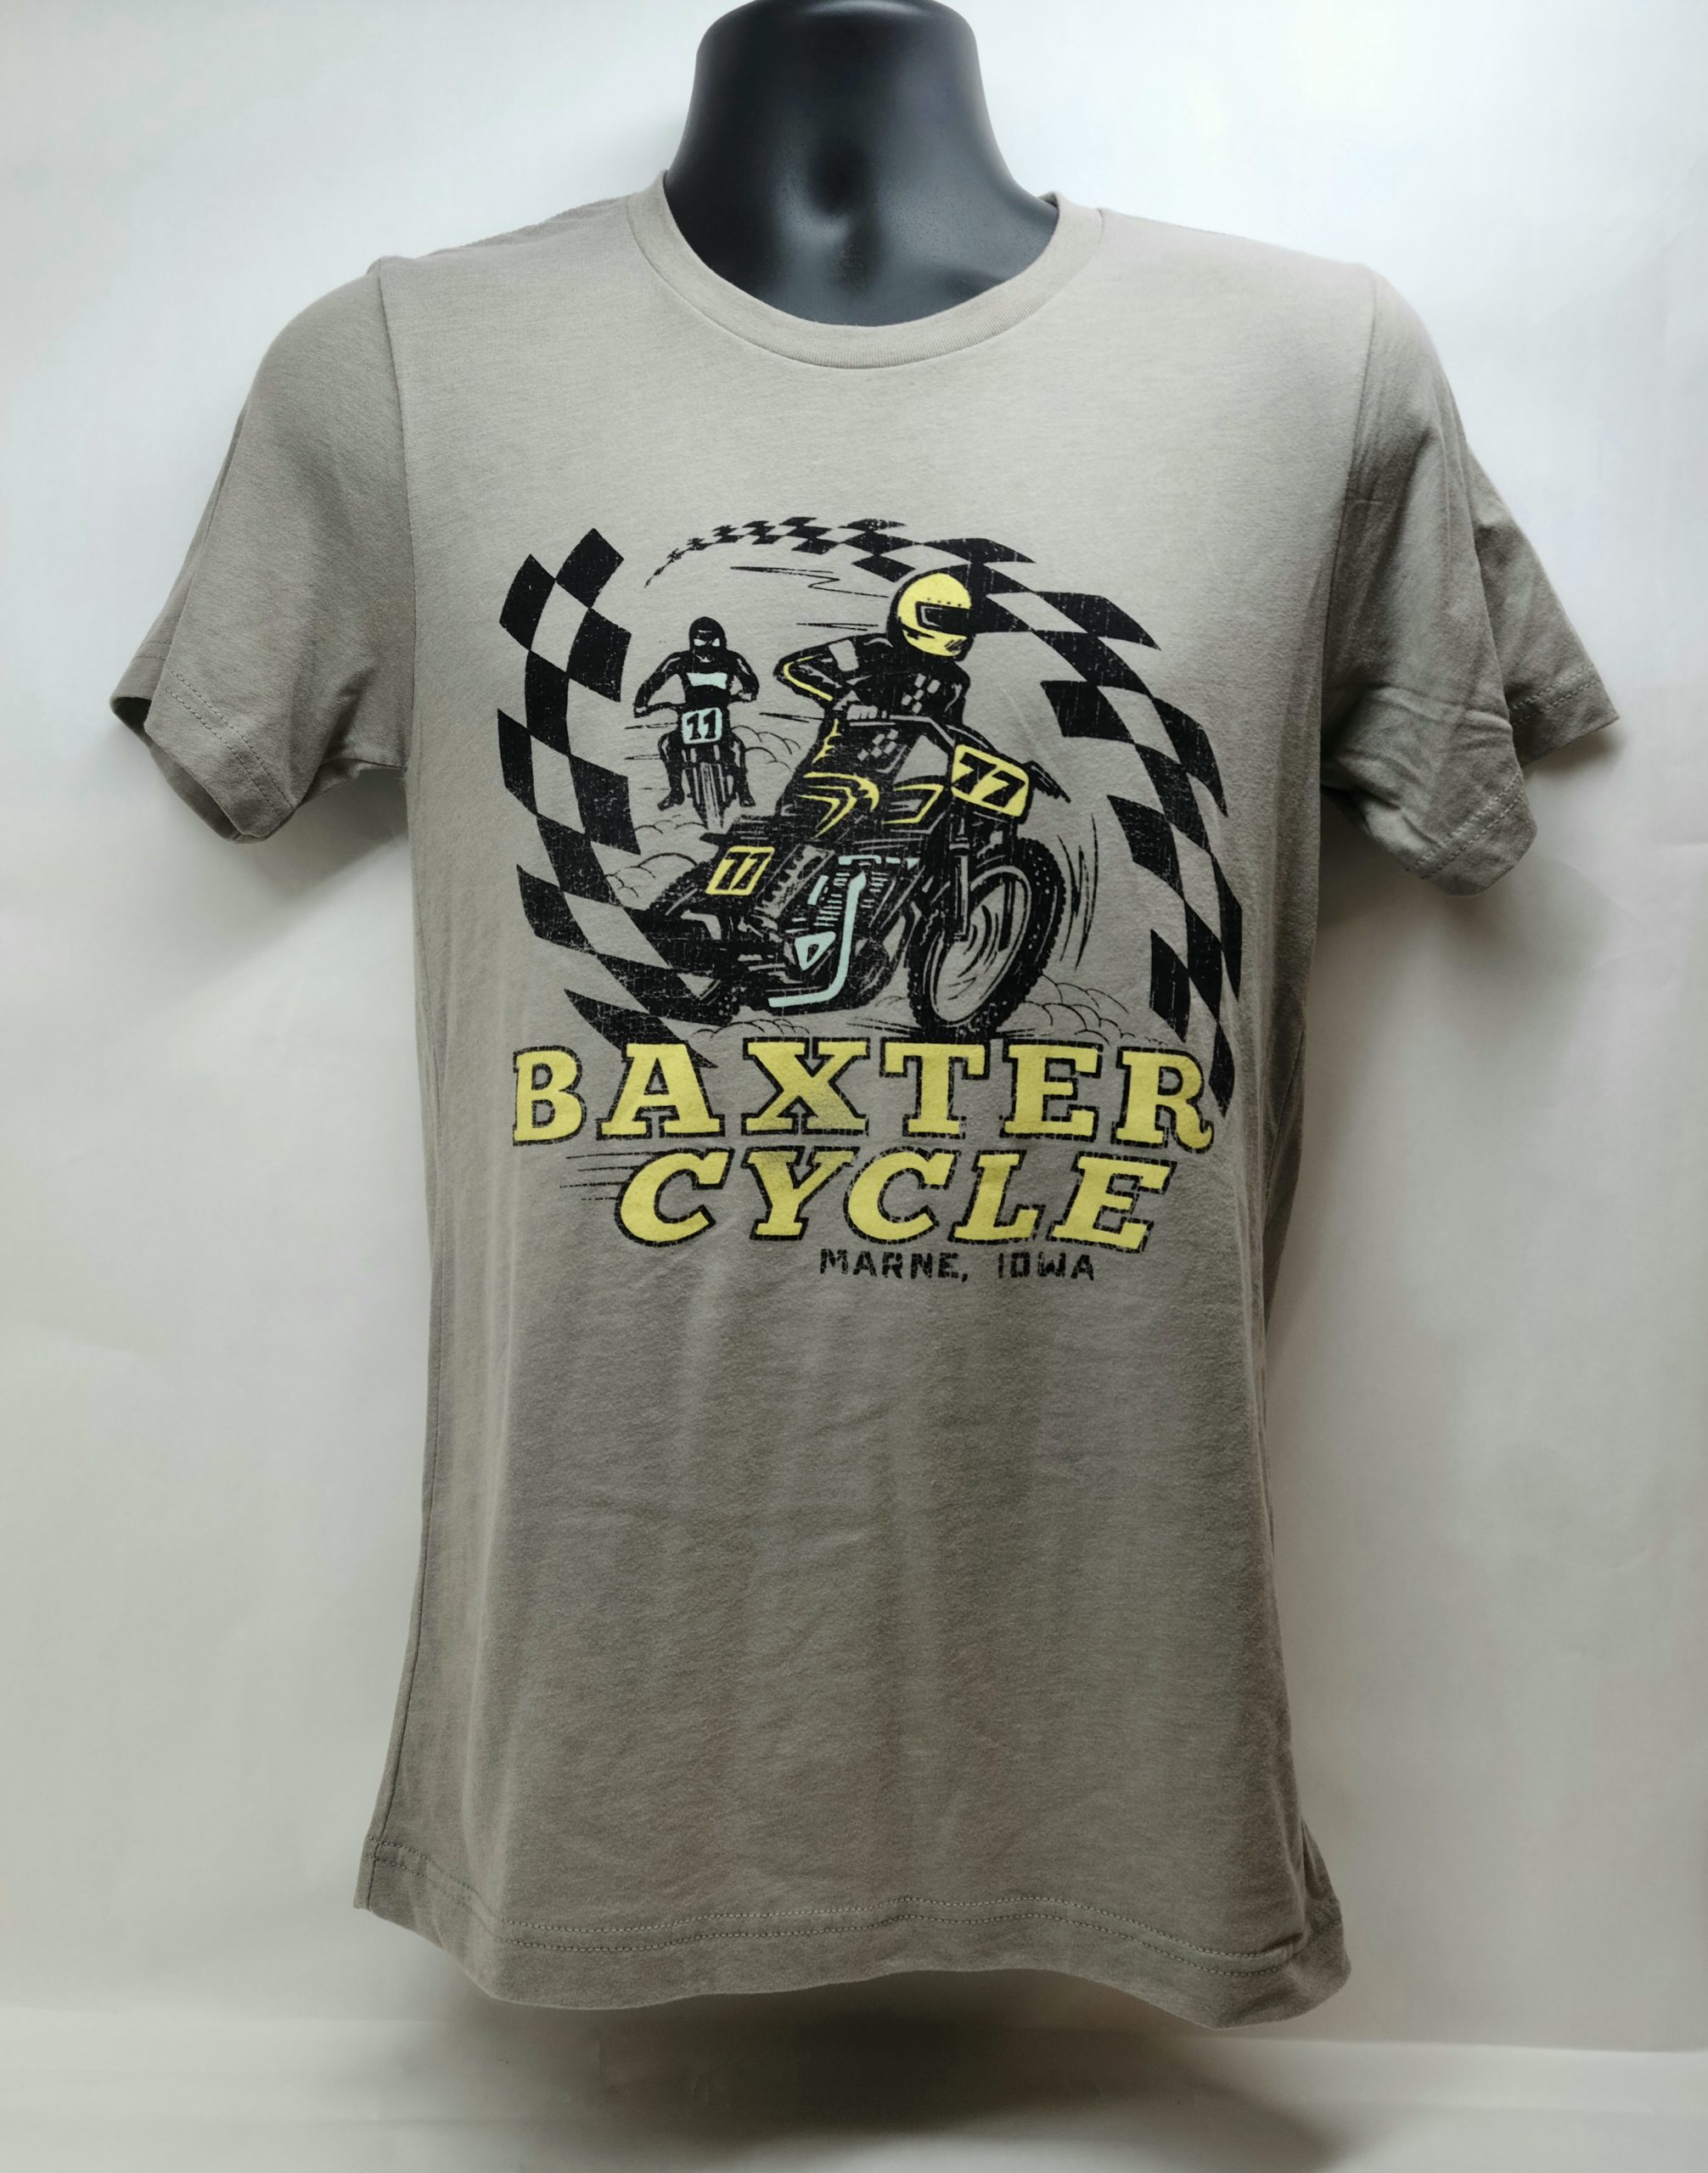 Baxter Cycle “Flat Track” Tee – Baxter Cycle